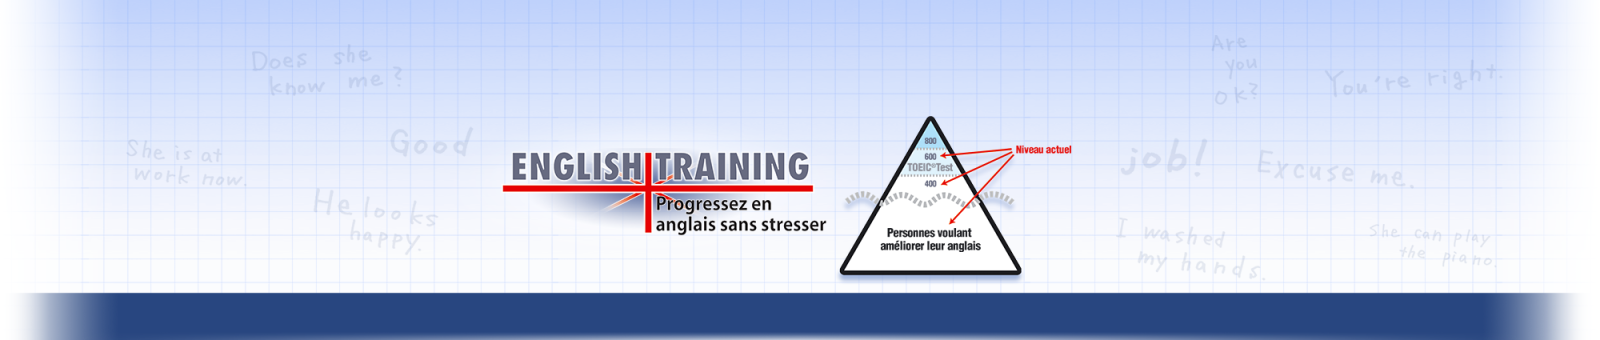 English Training : Progressez en anglais sans stresser